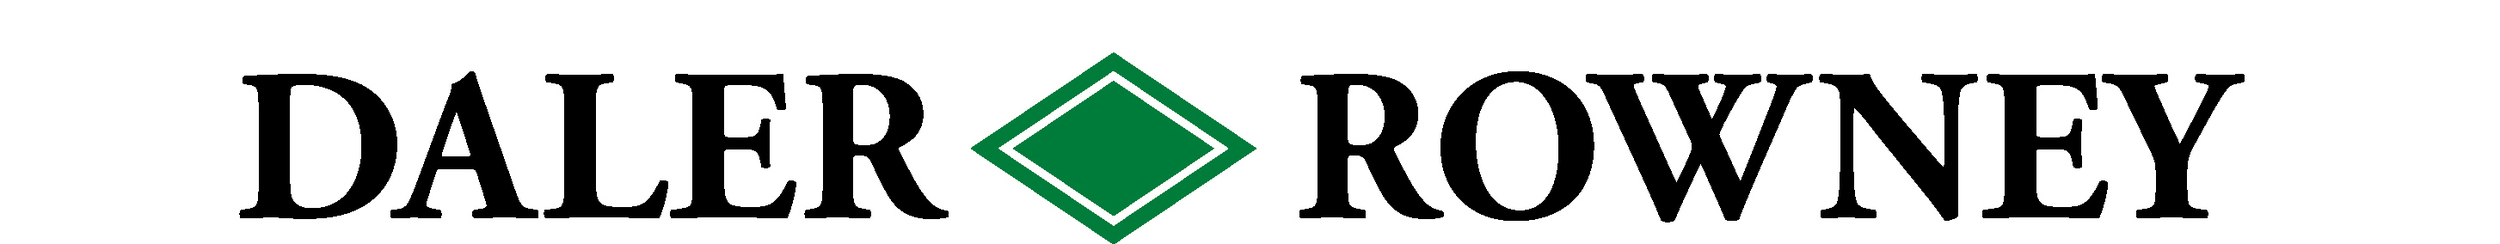 Daler Rowney-master-logo-356-RGBwhite.jpg